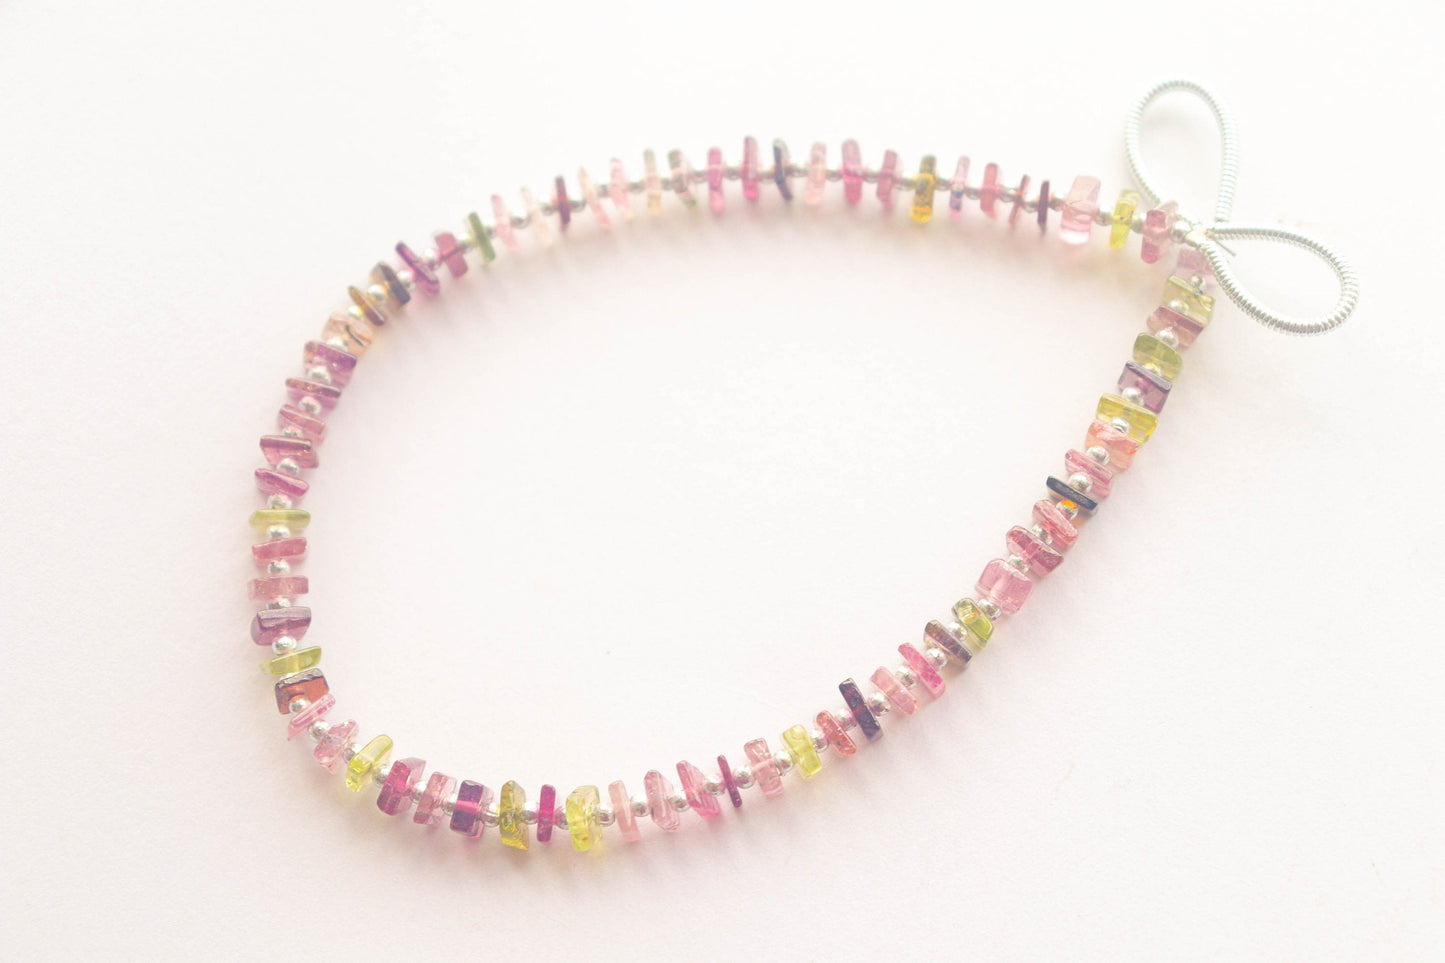 Multi Tourmaline Beads Smooth Square shape Heishi beads | 4mm | 8 Inch | Natural Tourmaline Gemstone Beads for Jewelry Making Beadsforyourjewelry